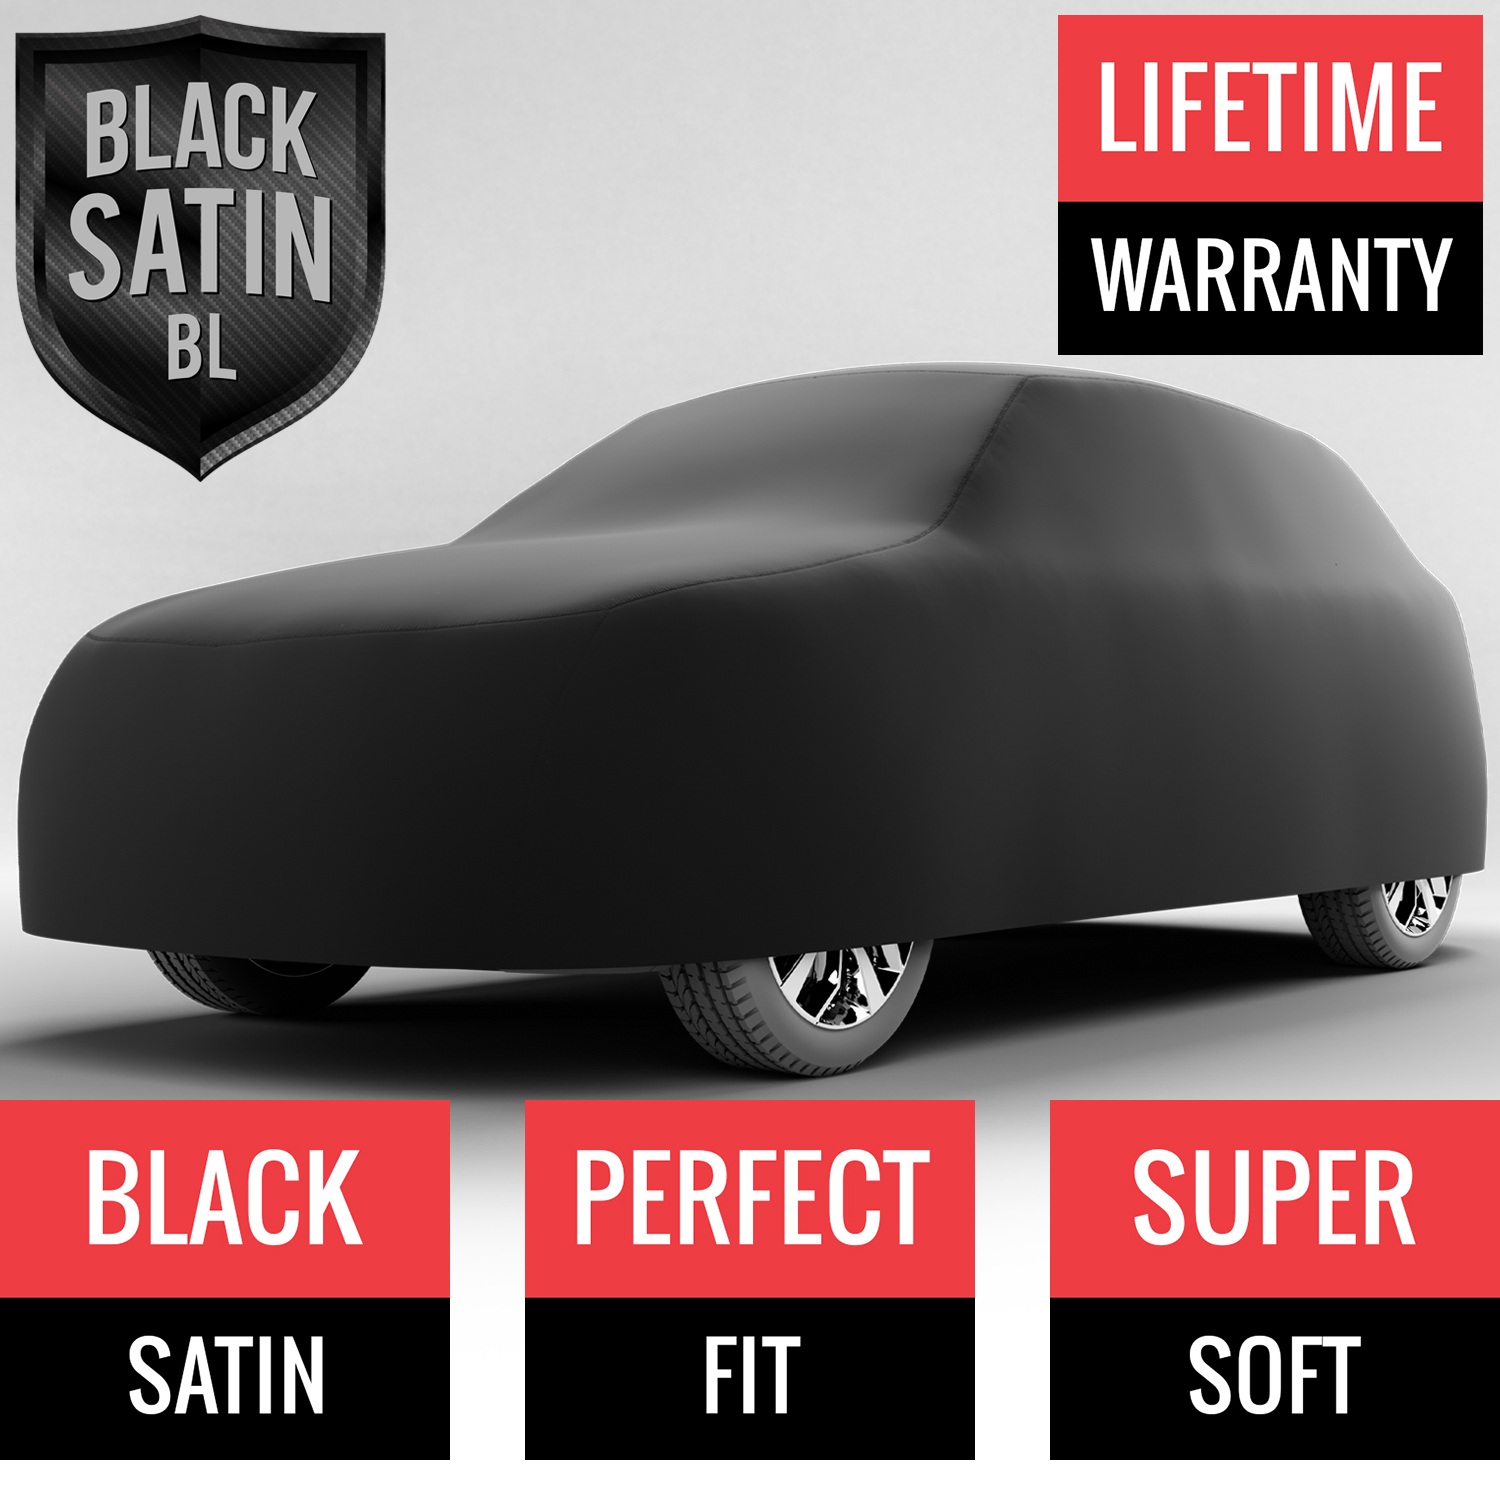 Black Satin BL - Black Car Cover for Scion xB 2016 Wagon 4-Door